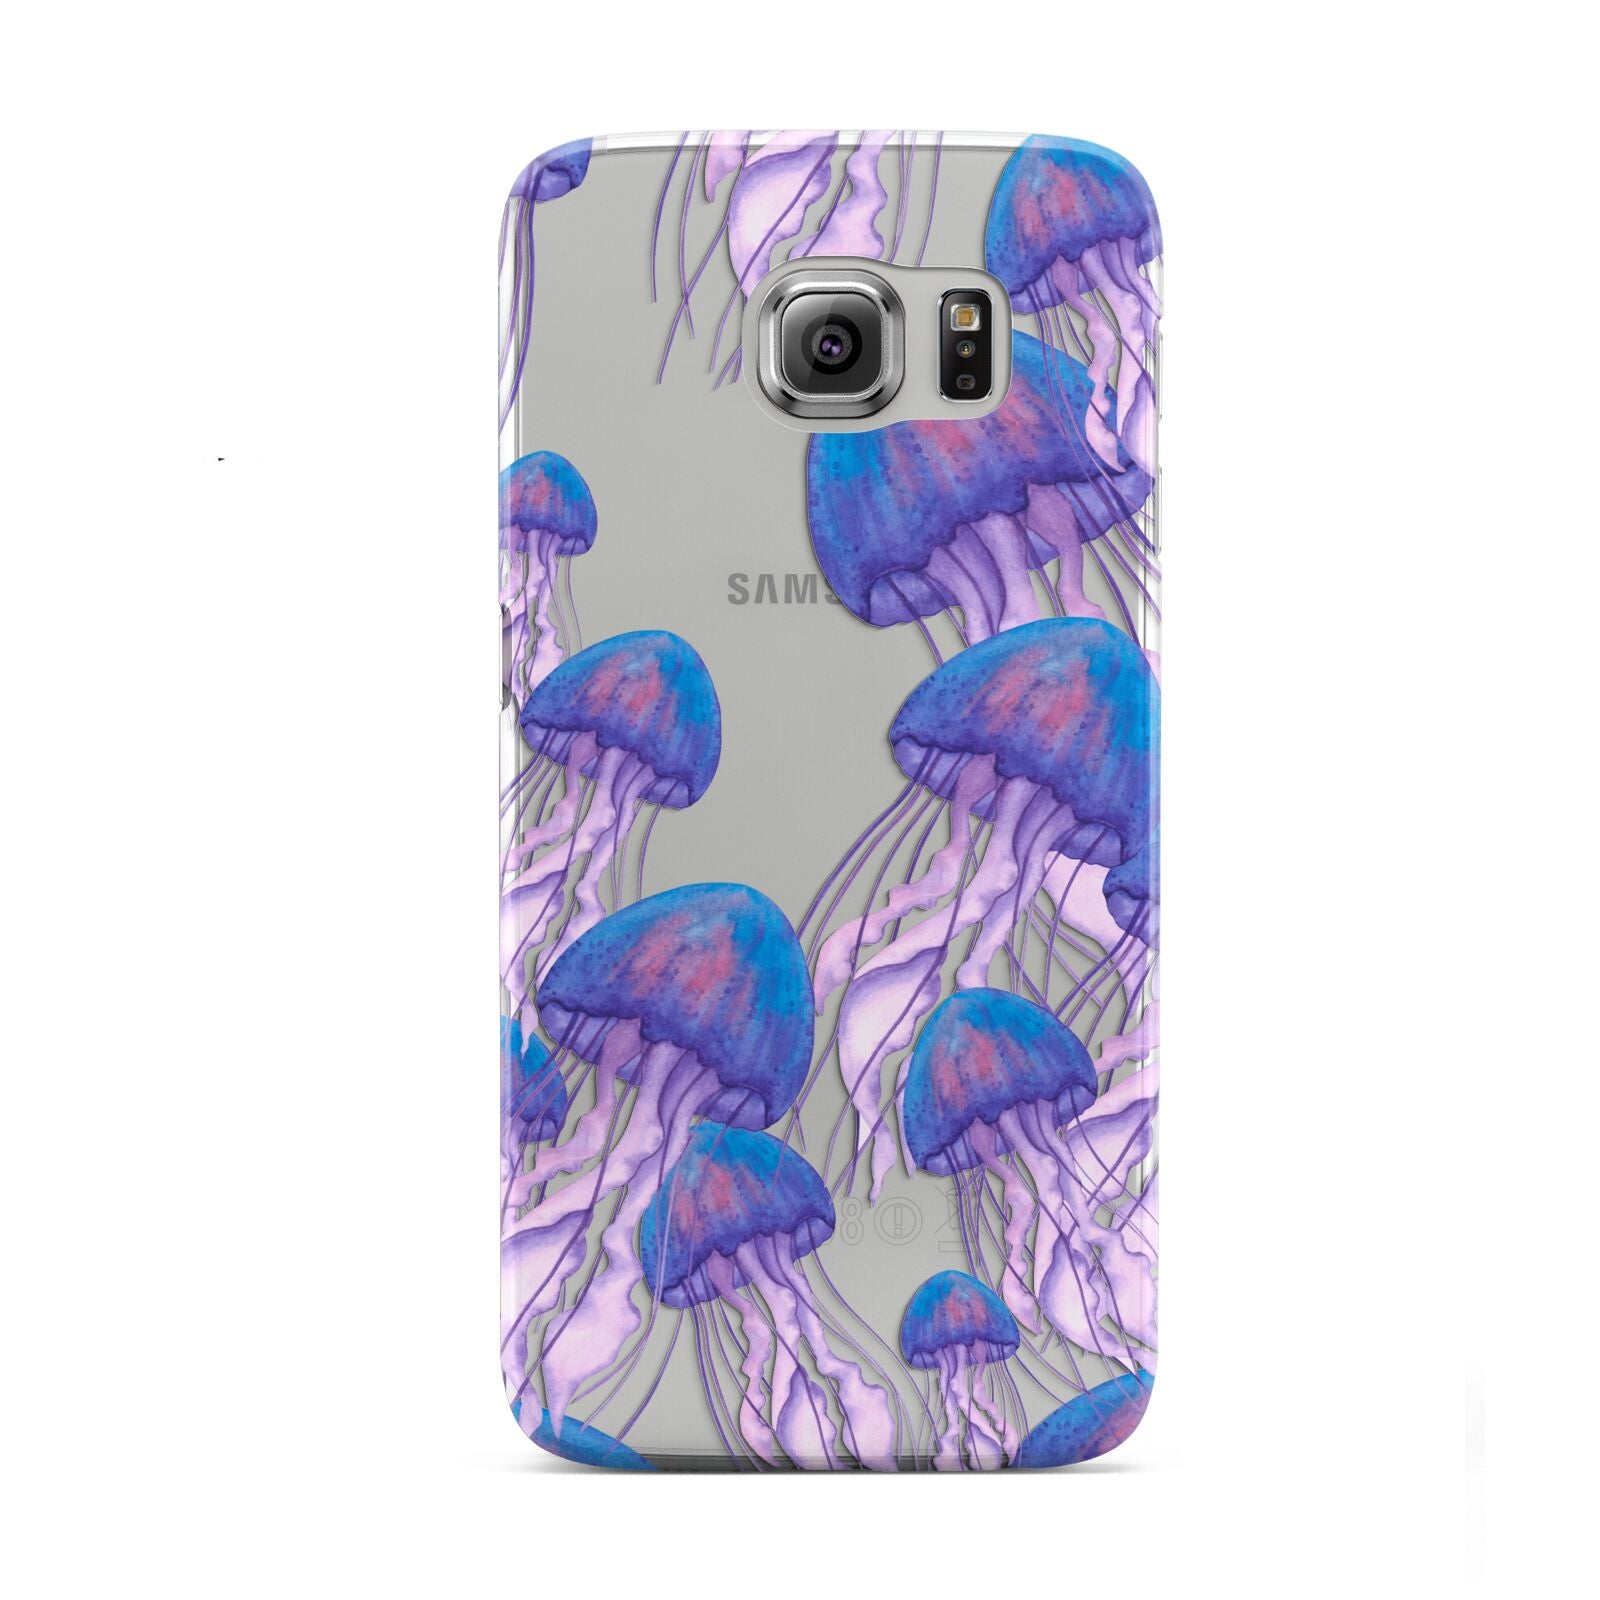 Jellyfish Samsung Galaxy S6 Case